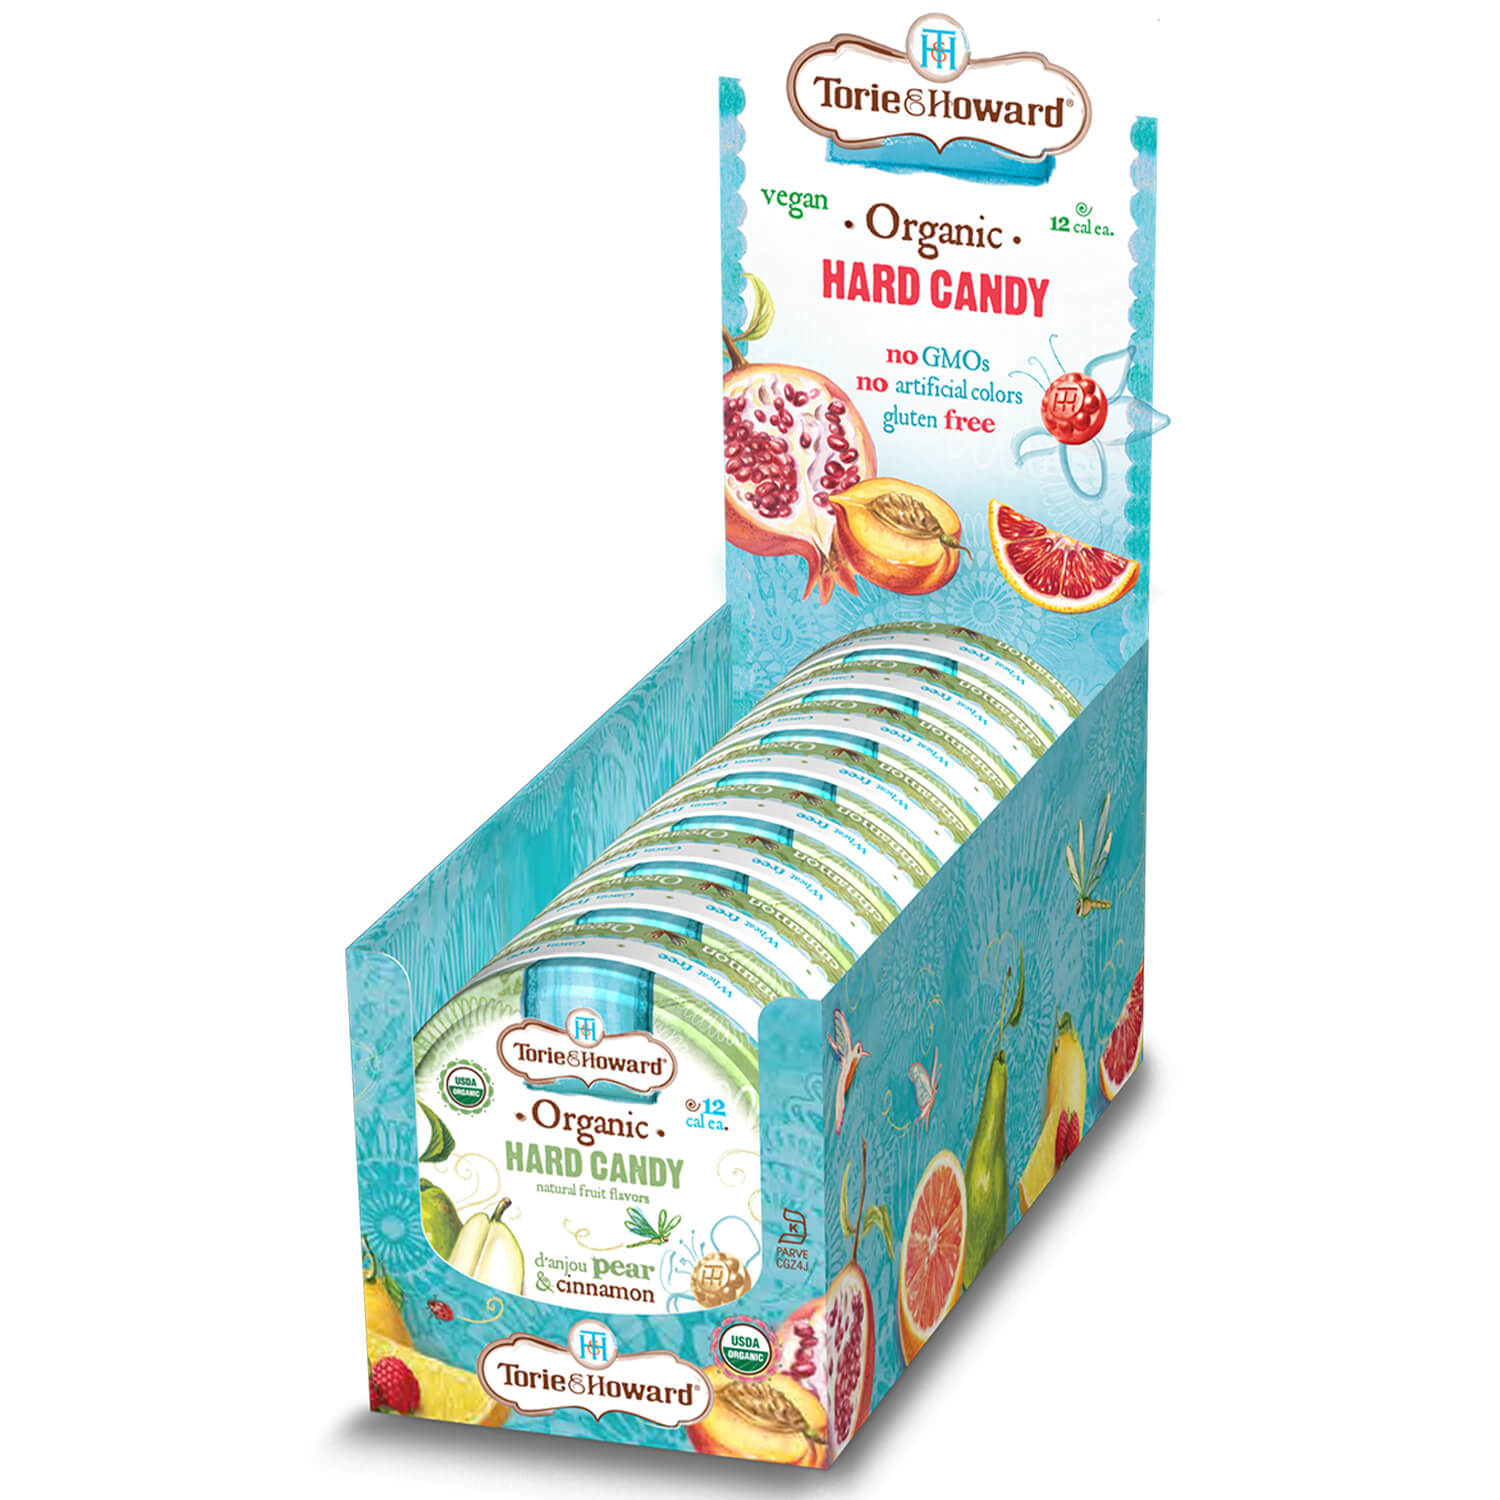 Torie & Howard Pear and Cinnamon Organic Hard Candy 2oz Tins (8ct Box)